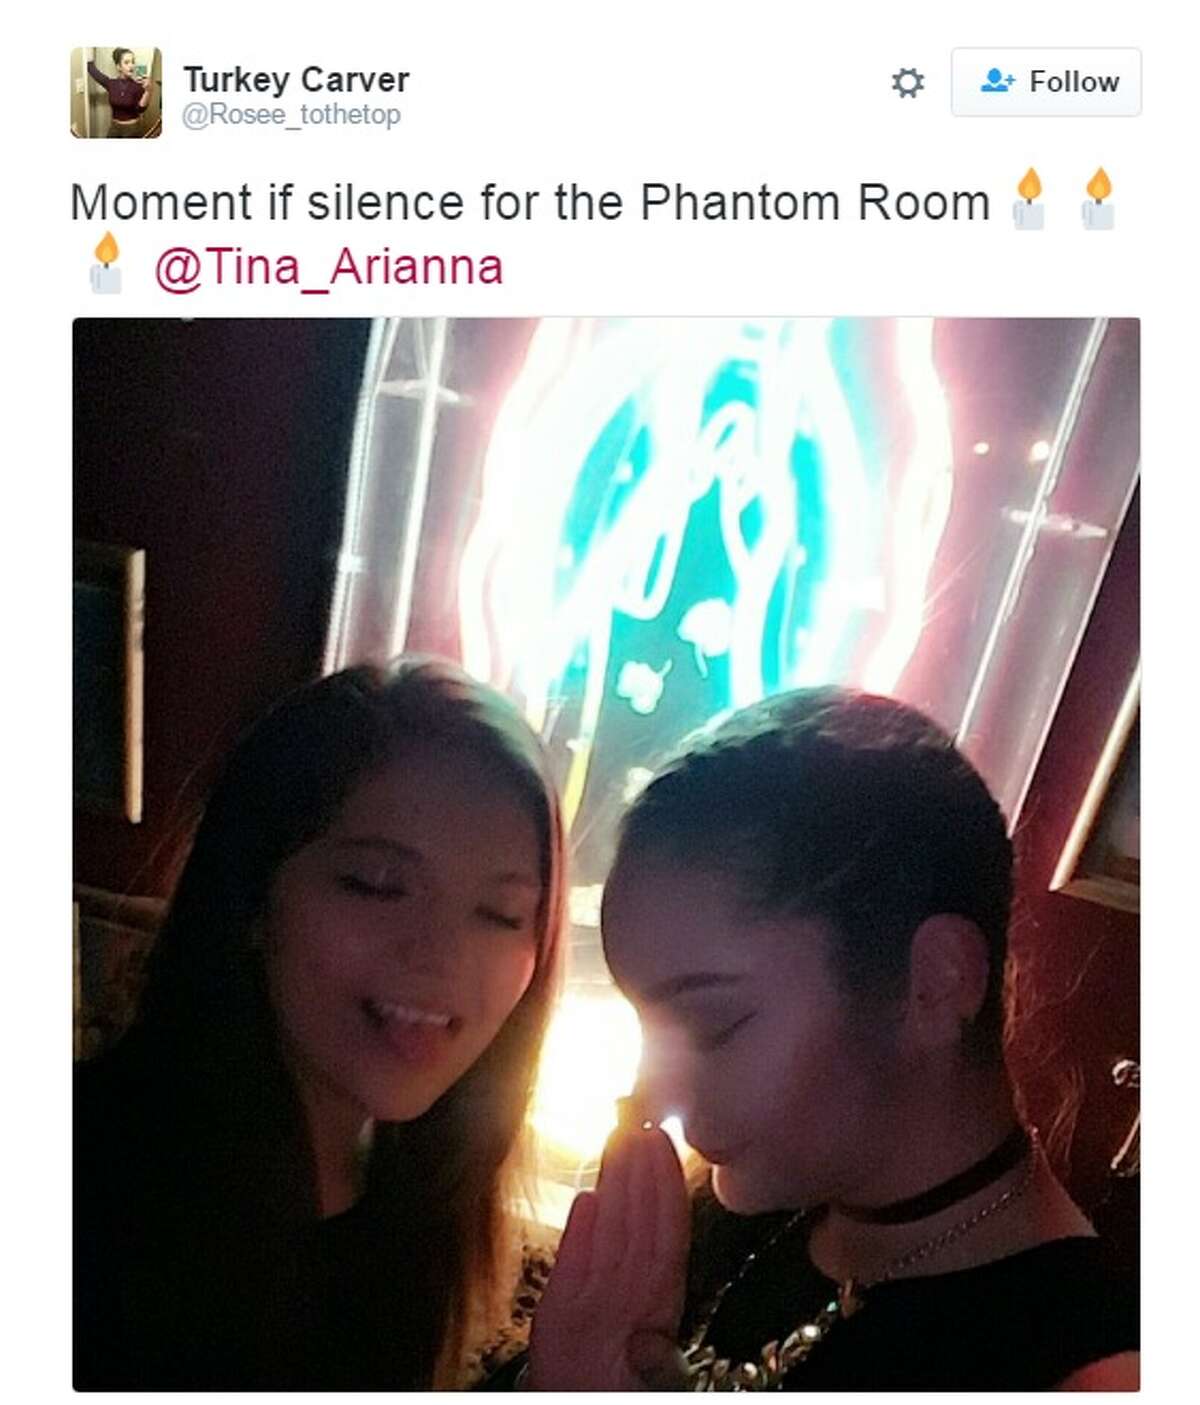 "Moment if silence for the Phantom Room